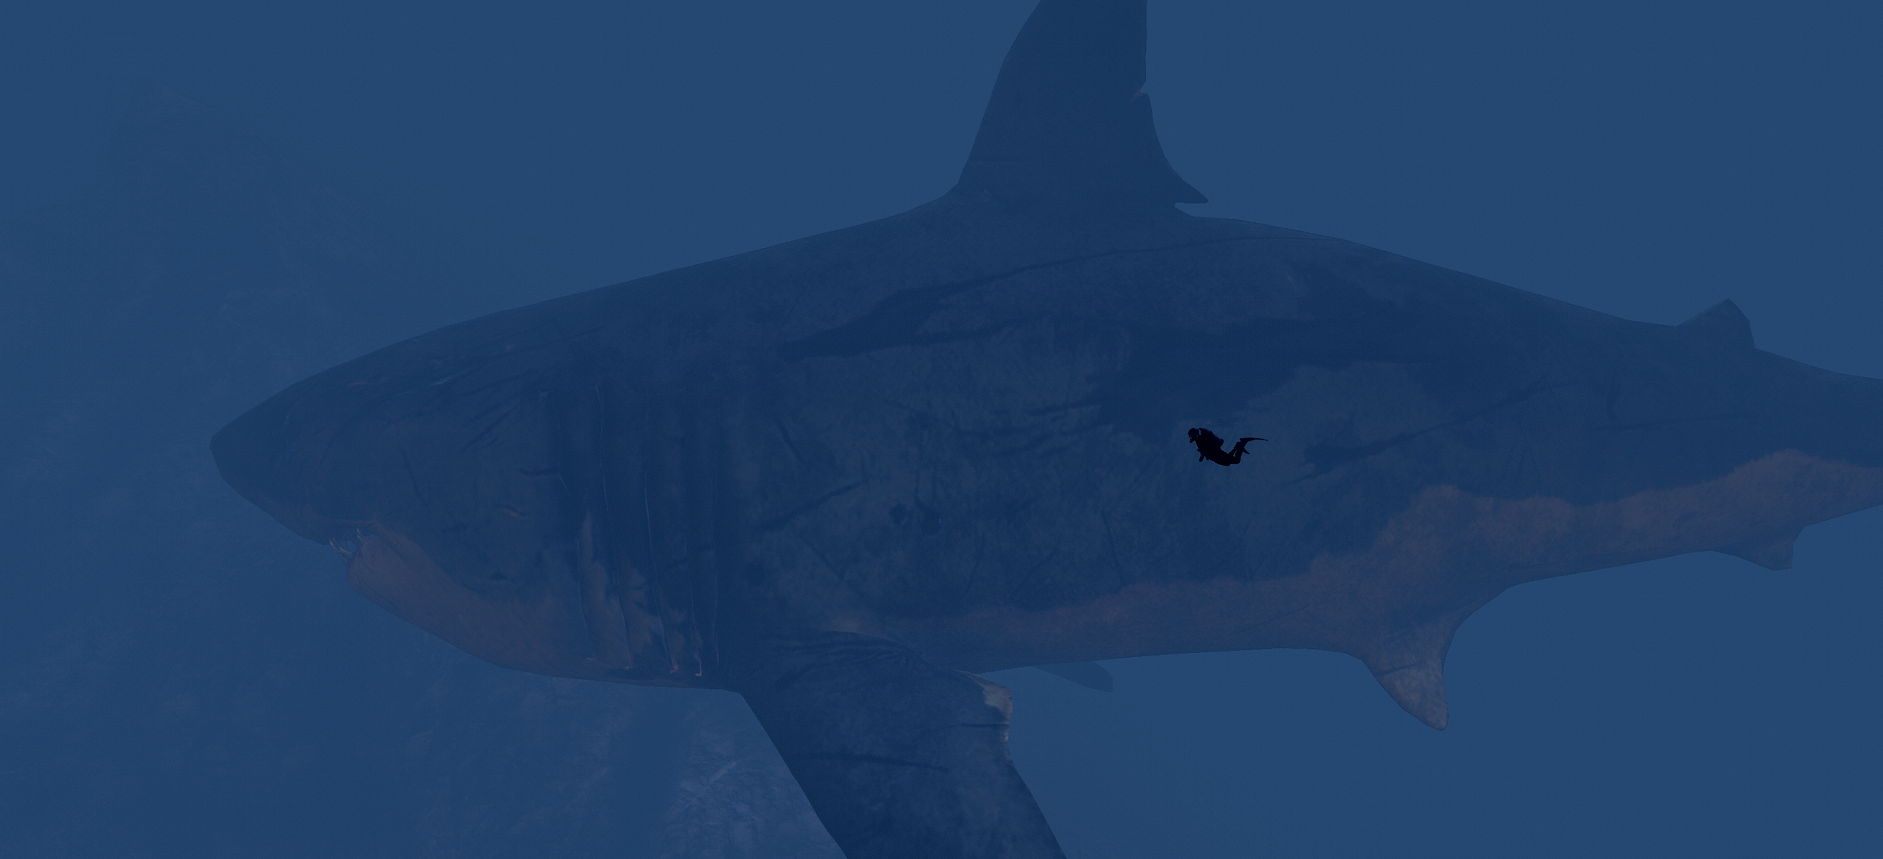 Gta 5 sharks in the water фото 20